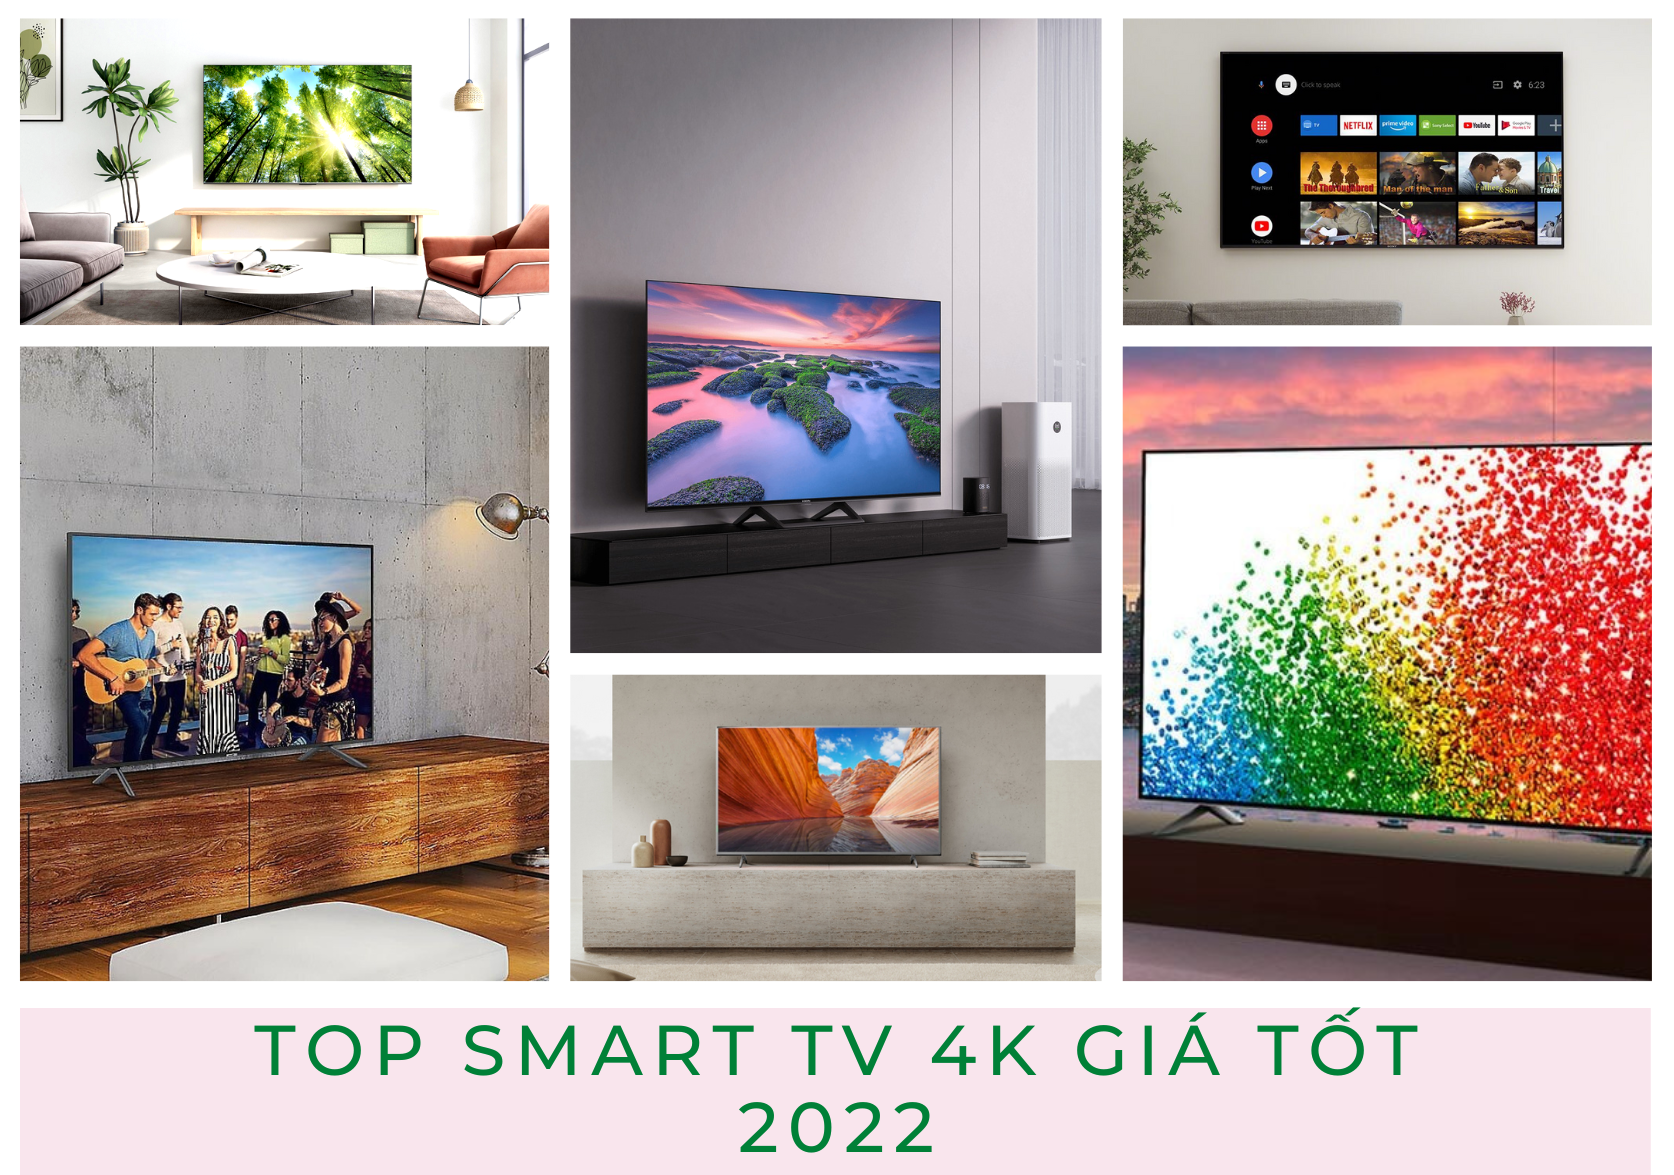 top-smart-tv-4k-gia-tot-2022.png (2.48 MB)